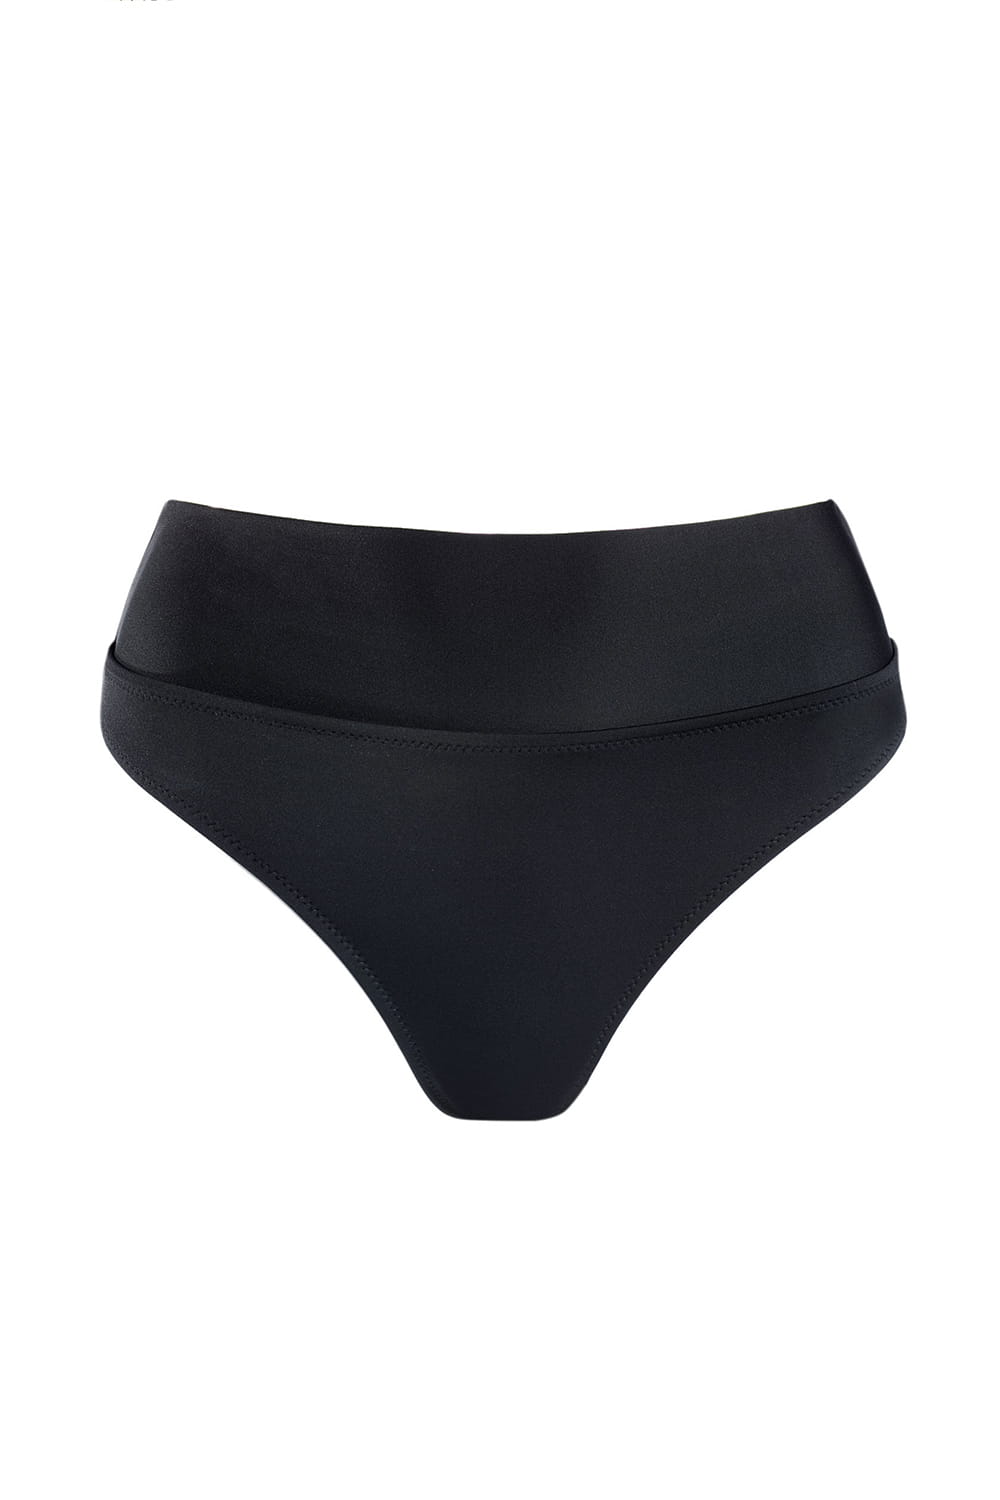 Axami Luxury Swimwear F114 High Waisted Bikini Bottom Black